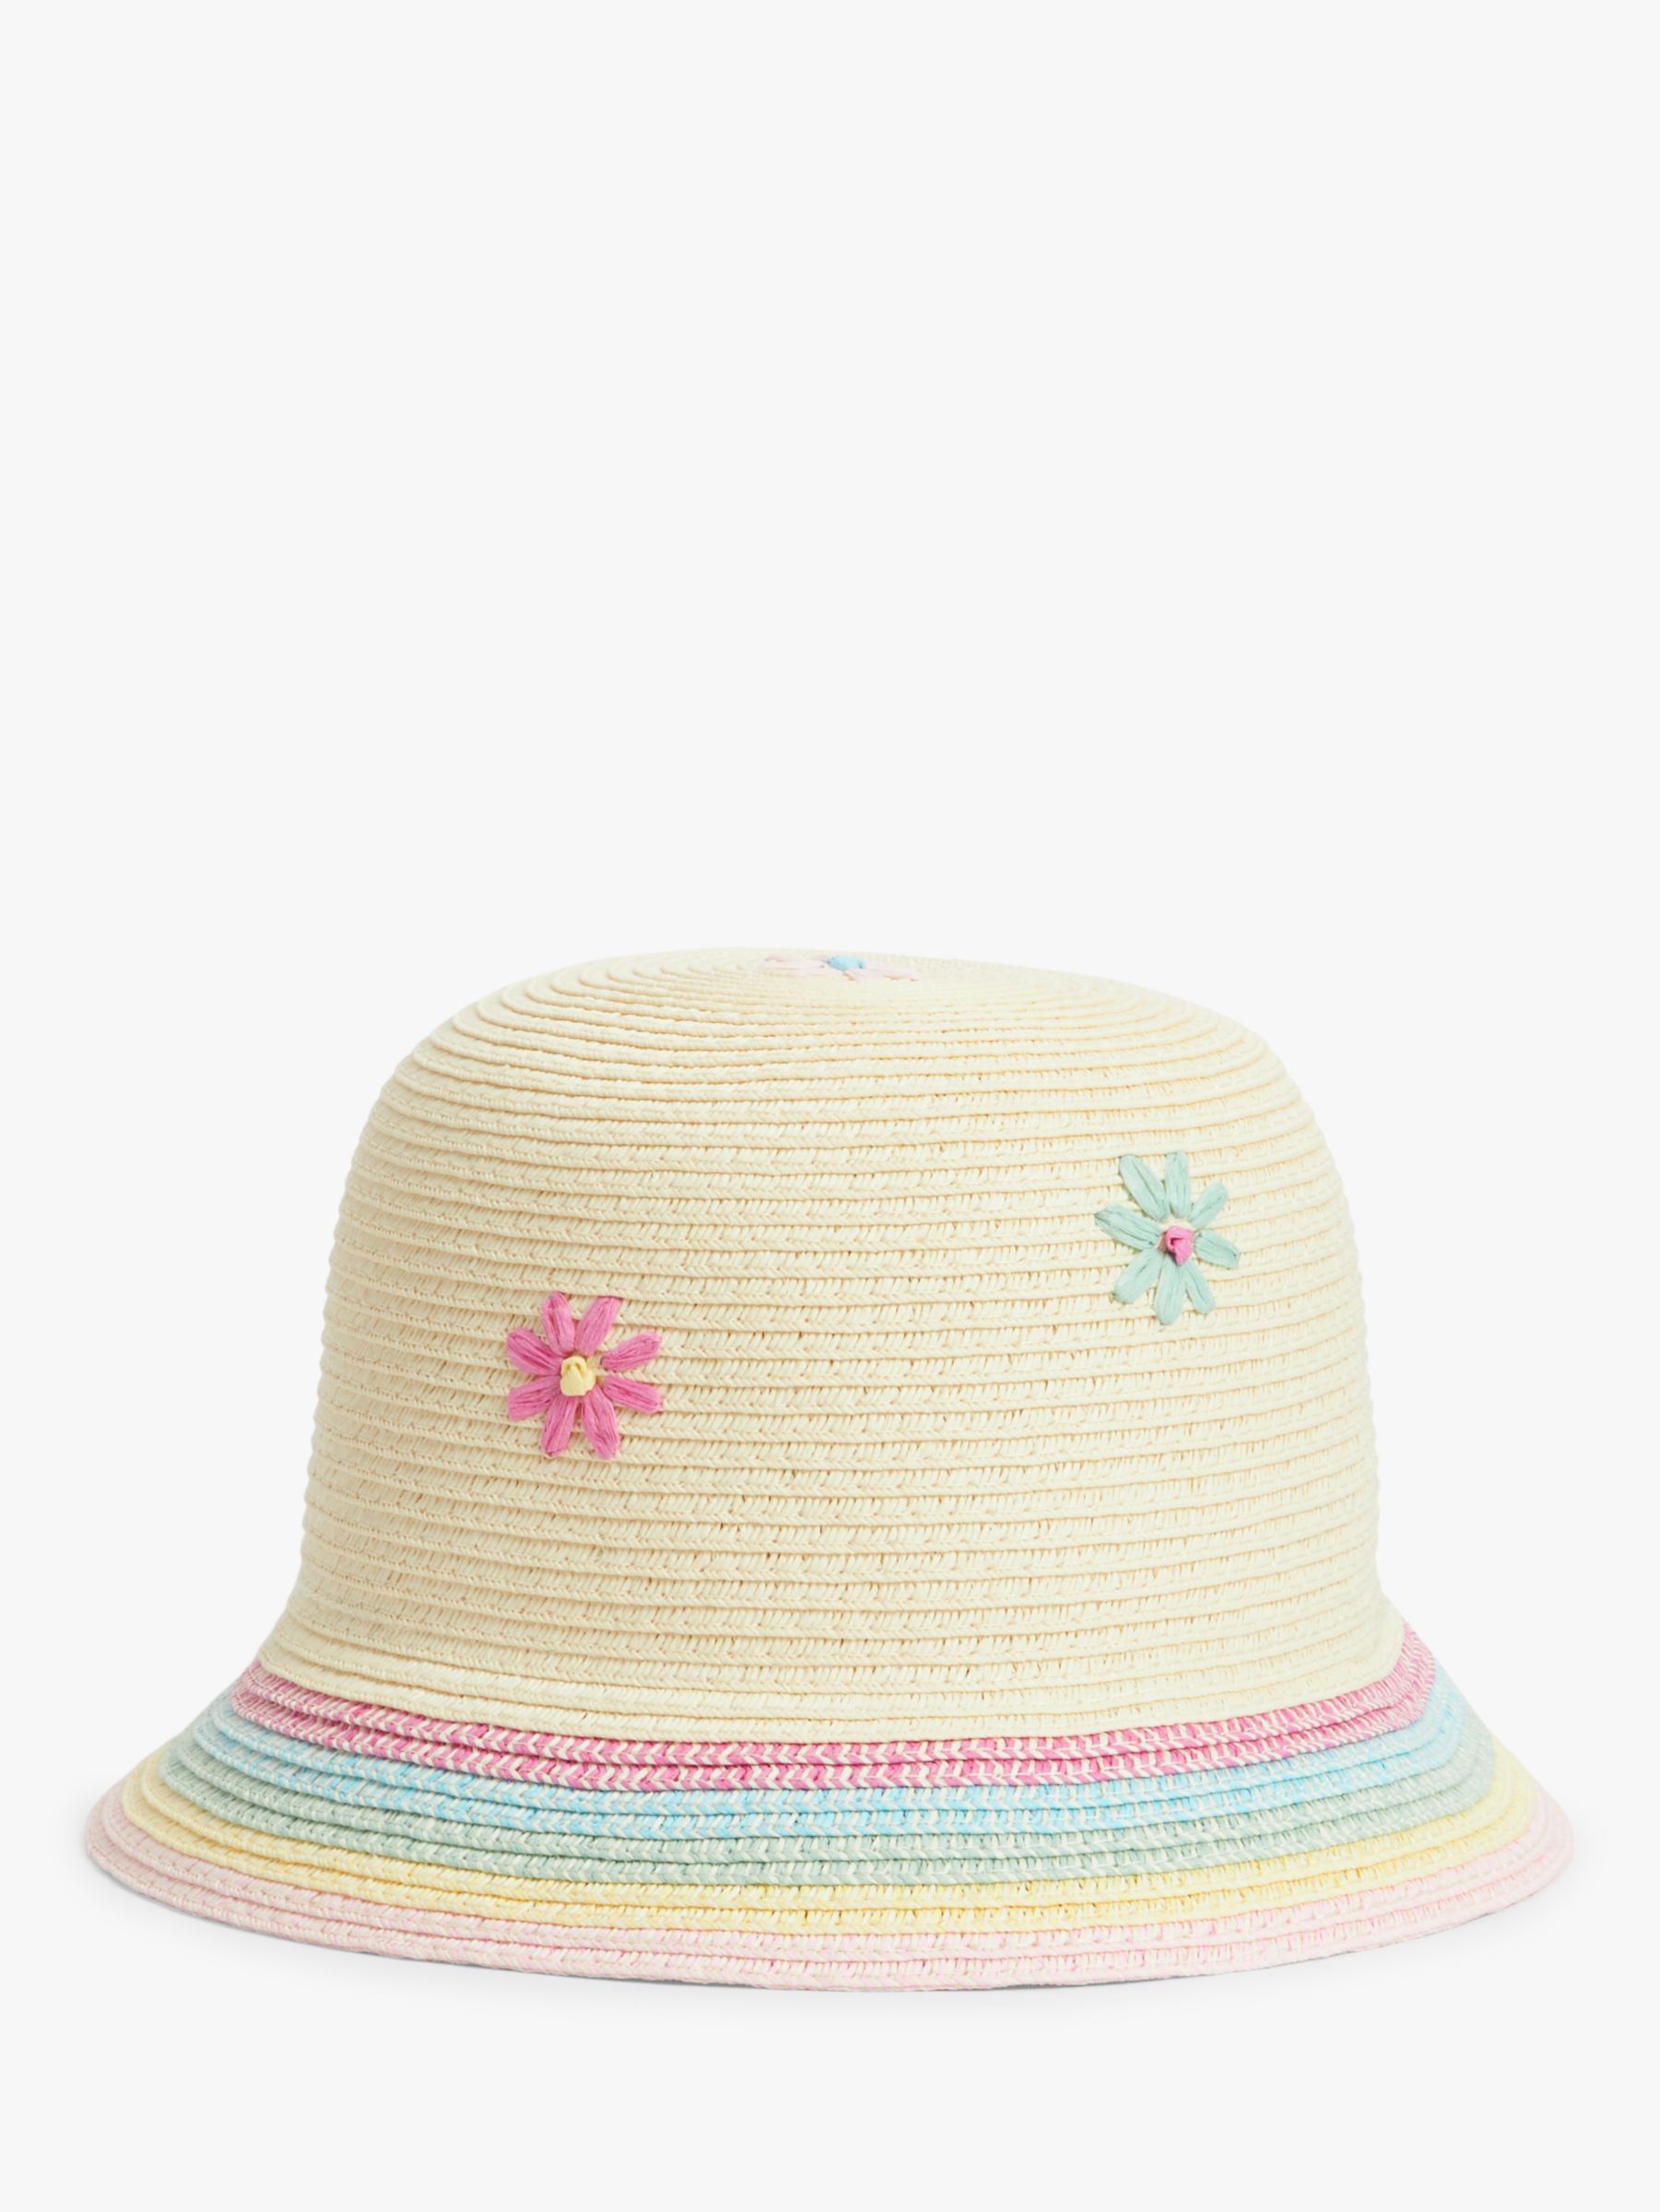 Gymboree Girls' and Toddler Sun Hat